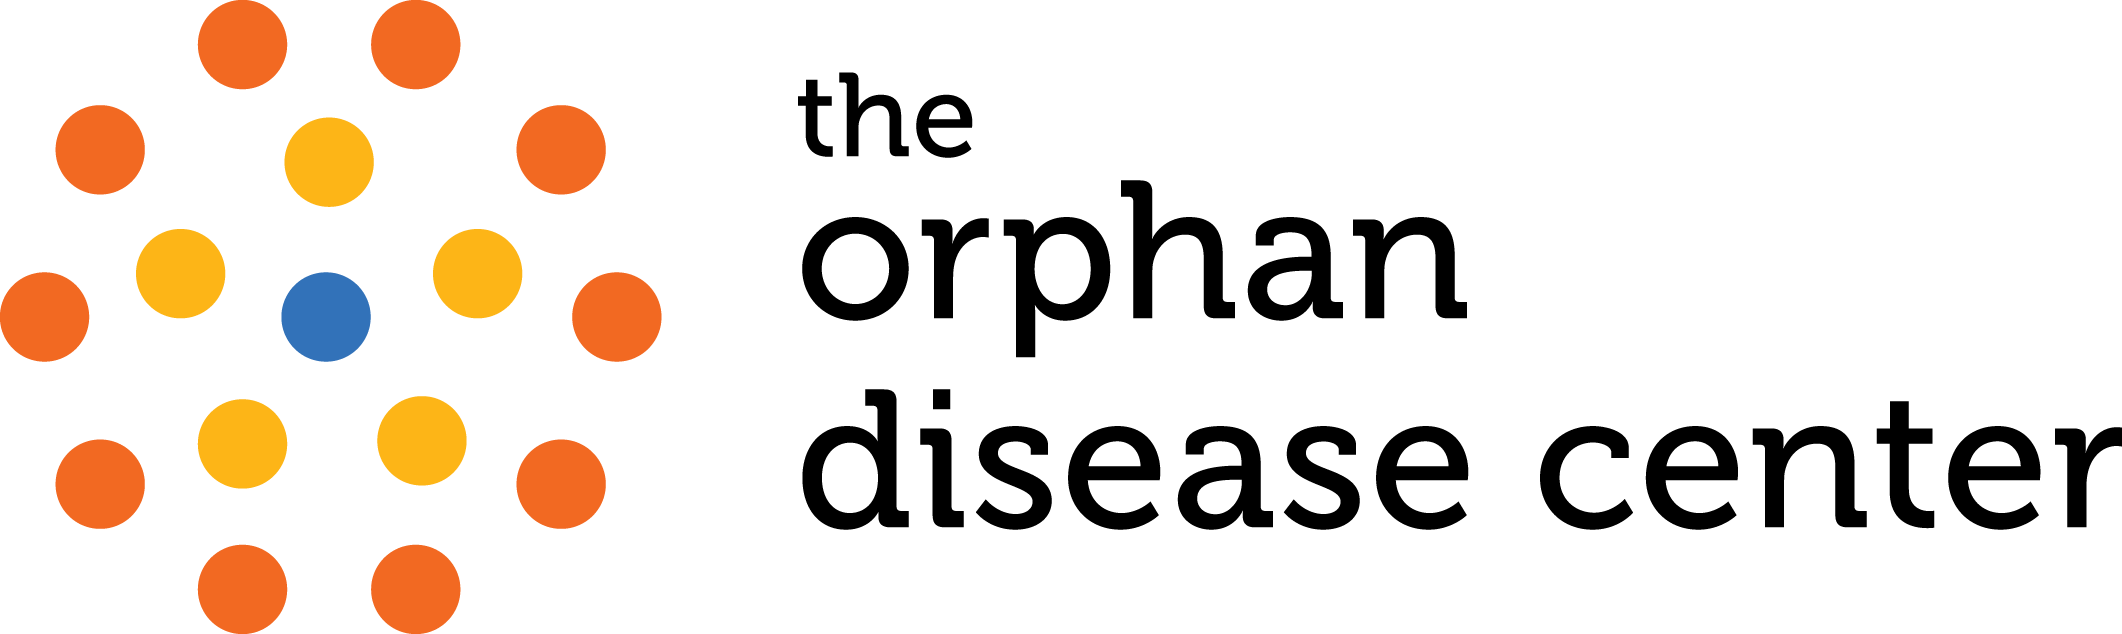 The orphan disease center